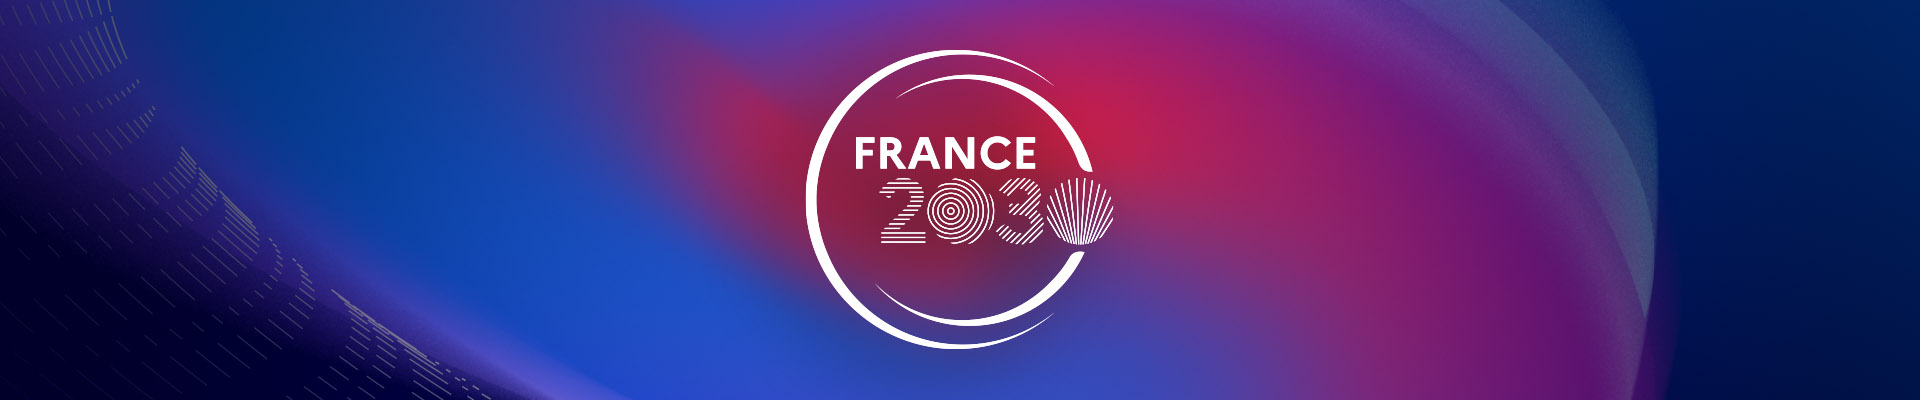 Les ambassadeurs de France 2030